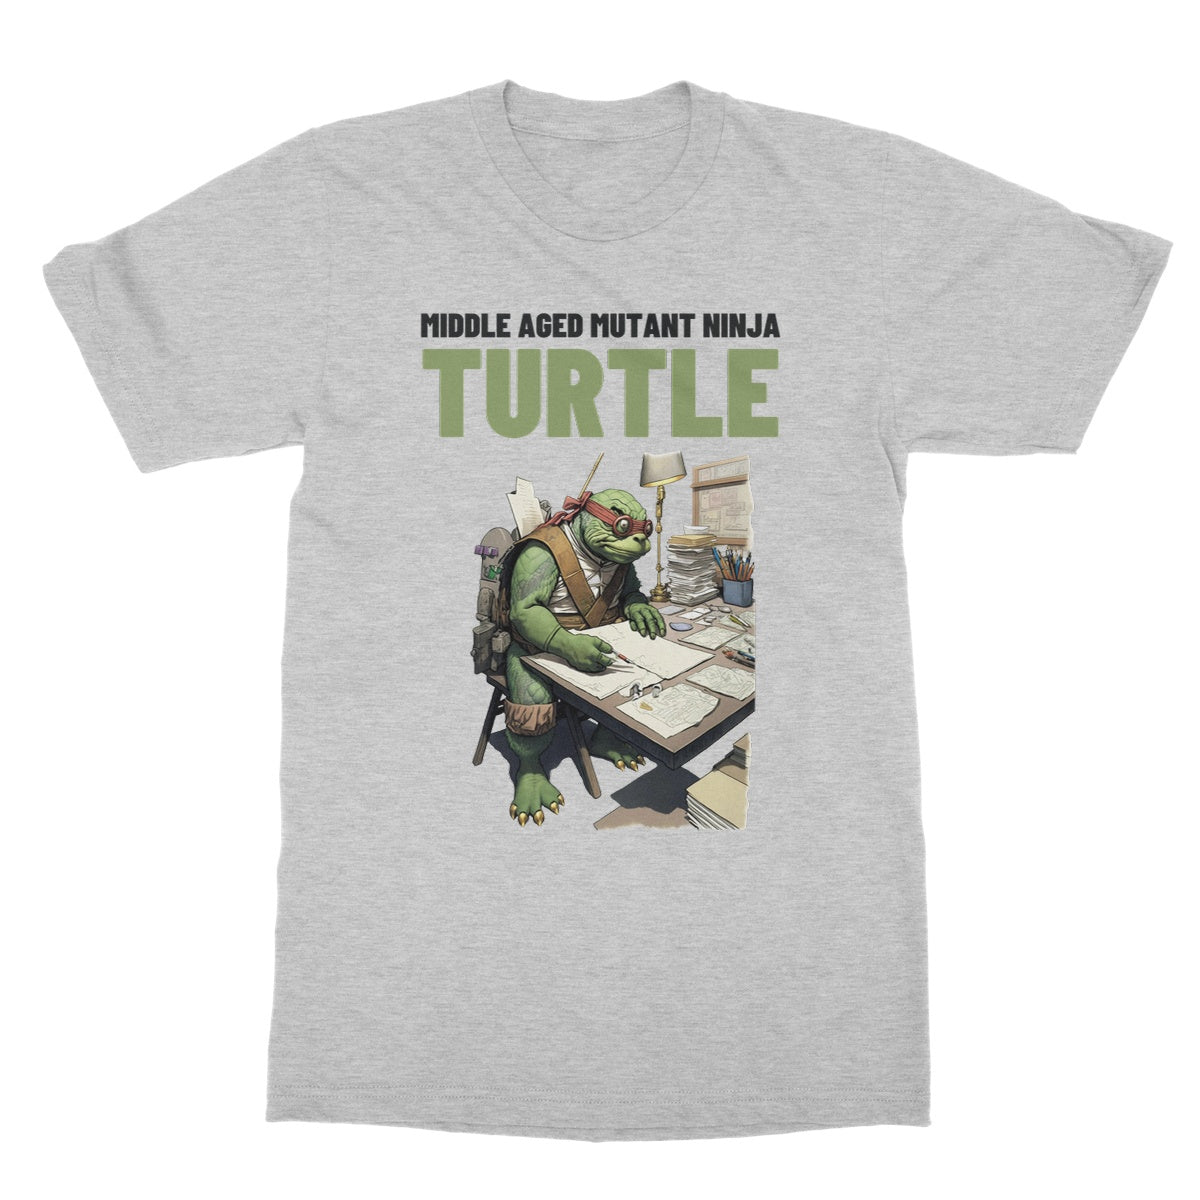 middle aged mutant ninja turtle t shirt light grey